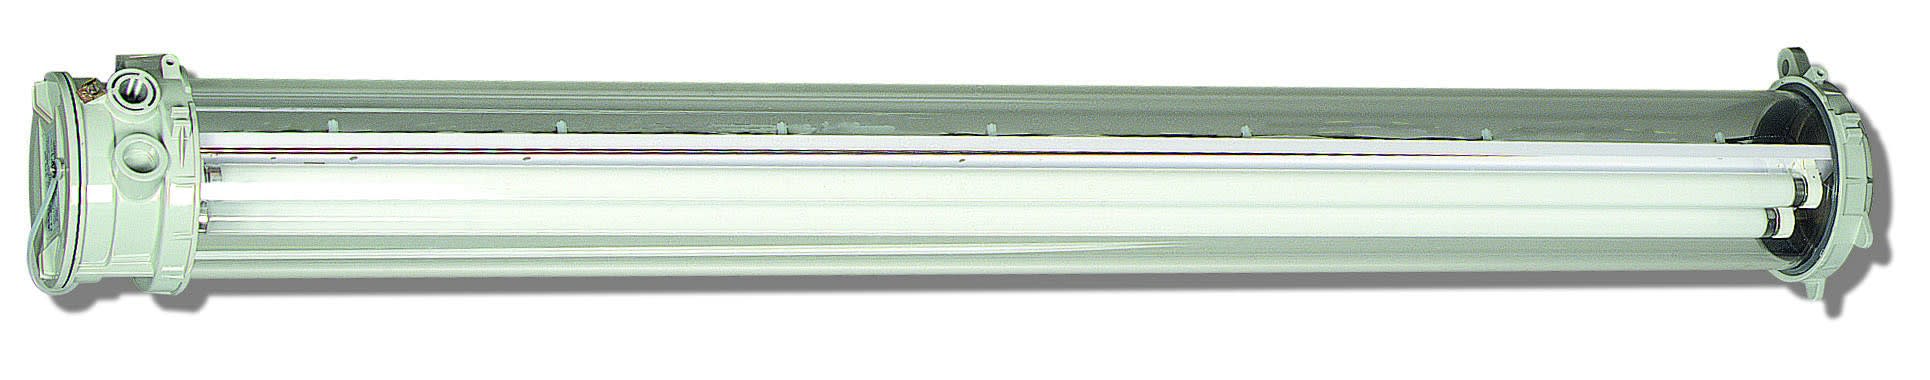 Atx - FD - Luminaire fluorescent 2x18W M20 ATEX - IECEx Zone 1-21